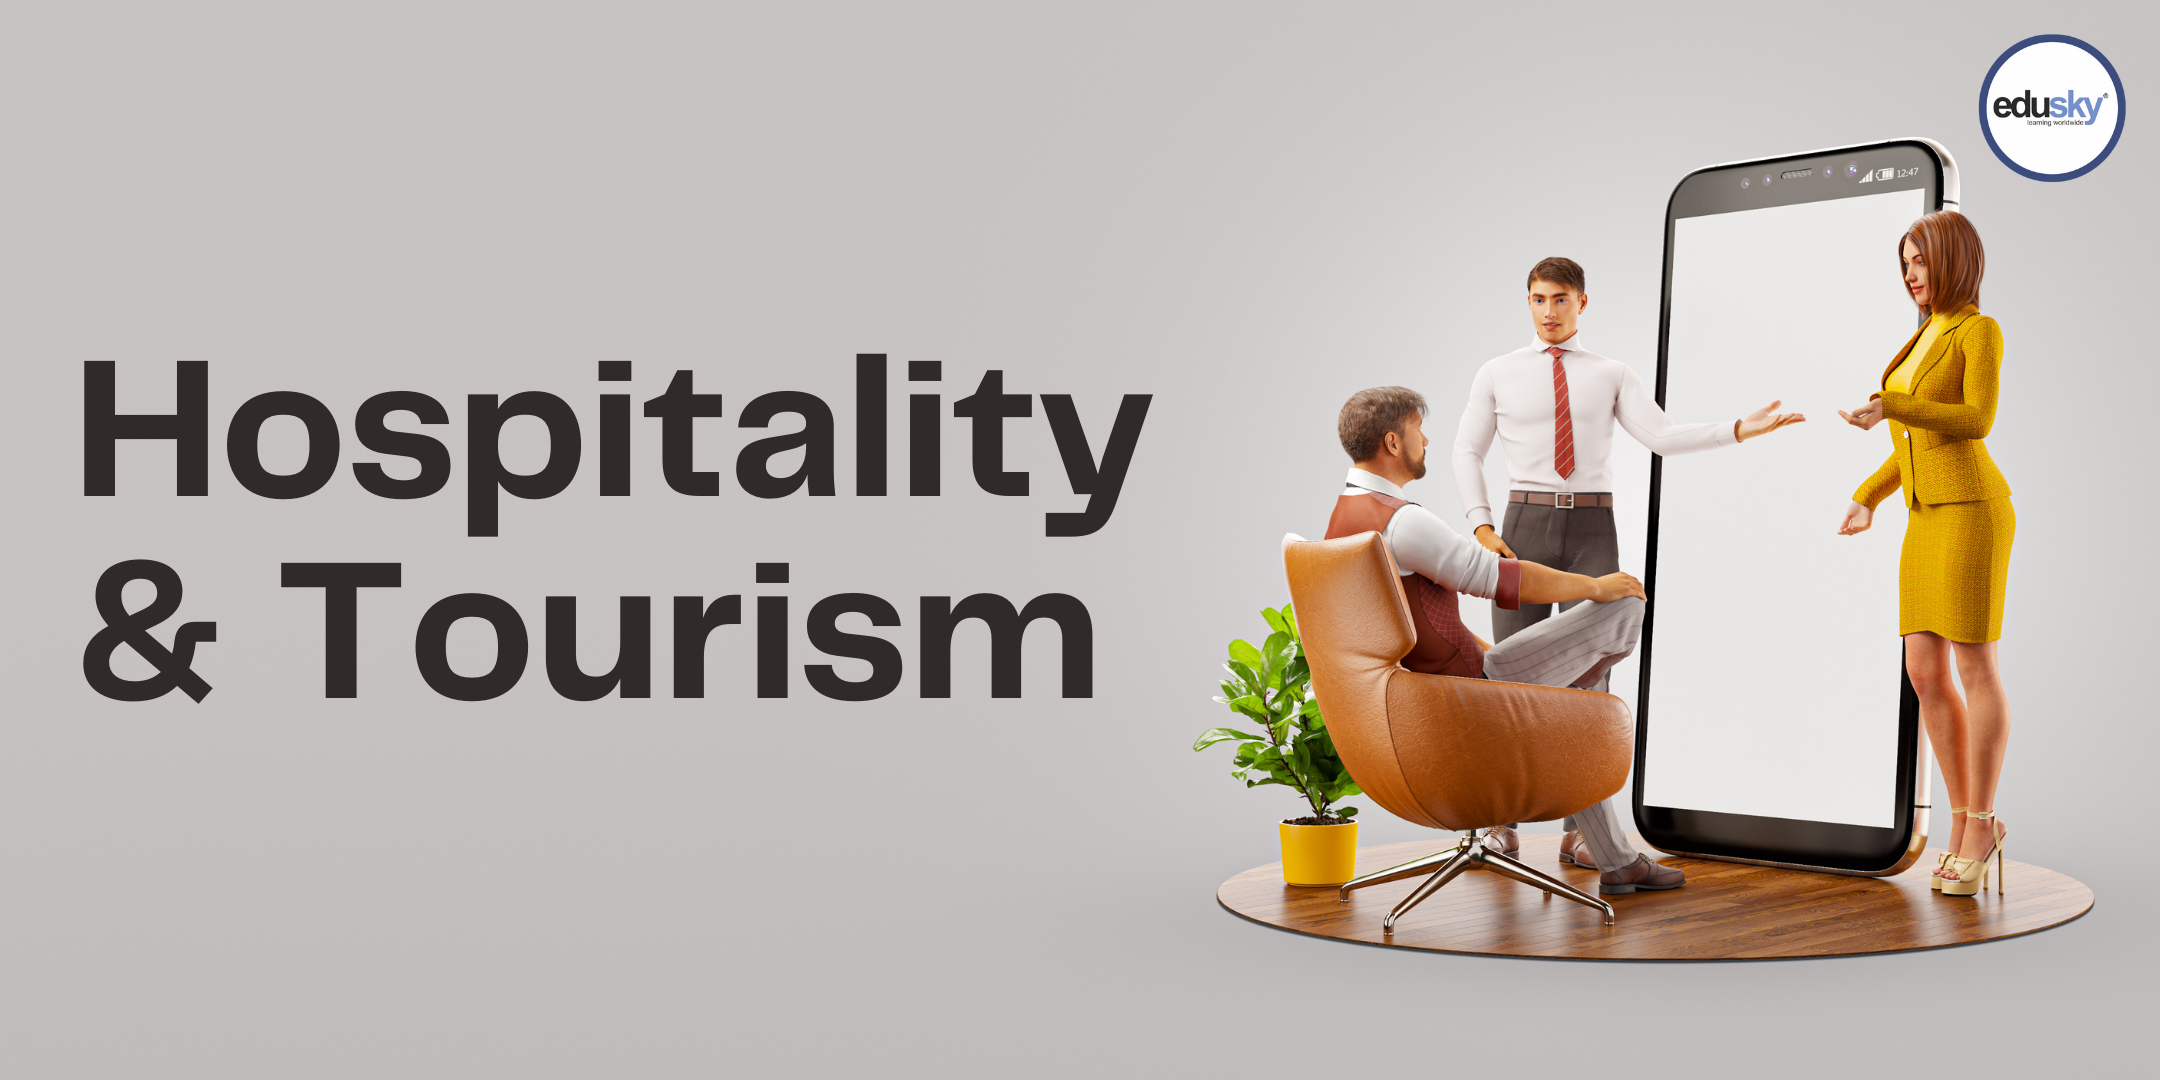 hospitality and tourism management courses in zimbabwe